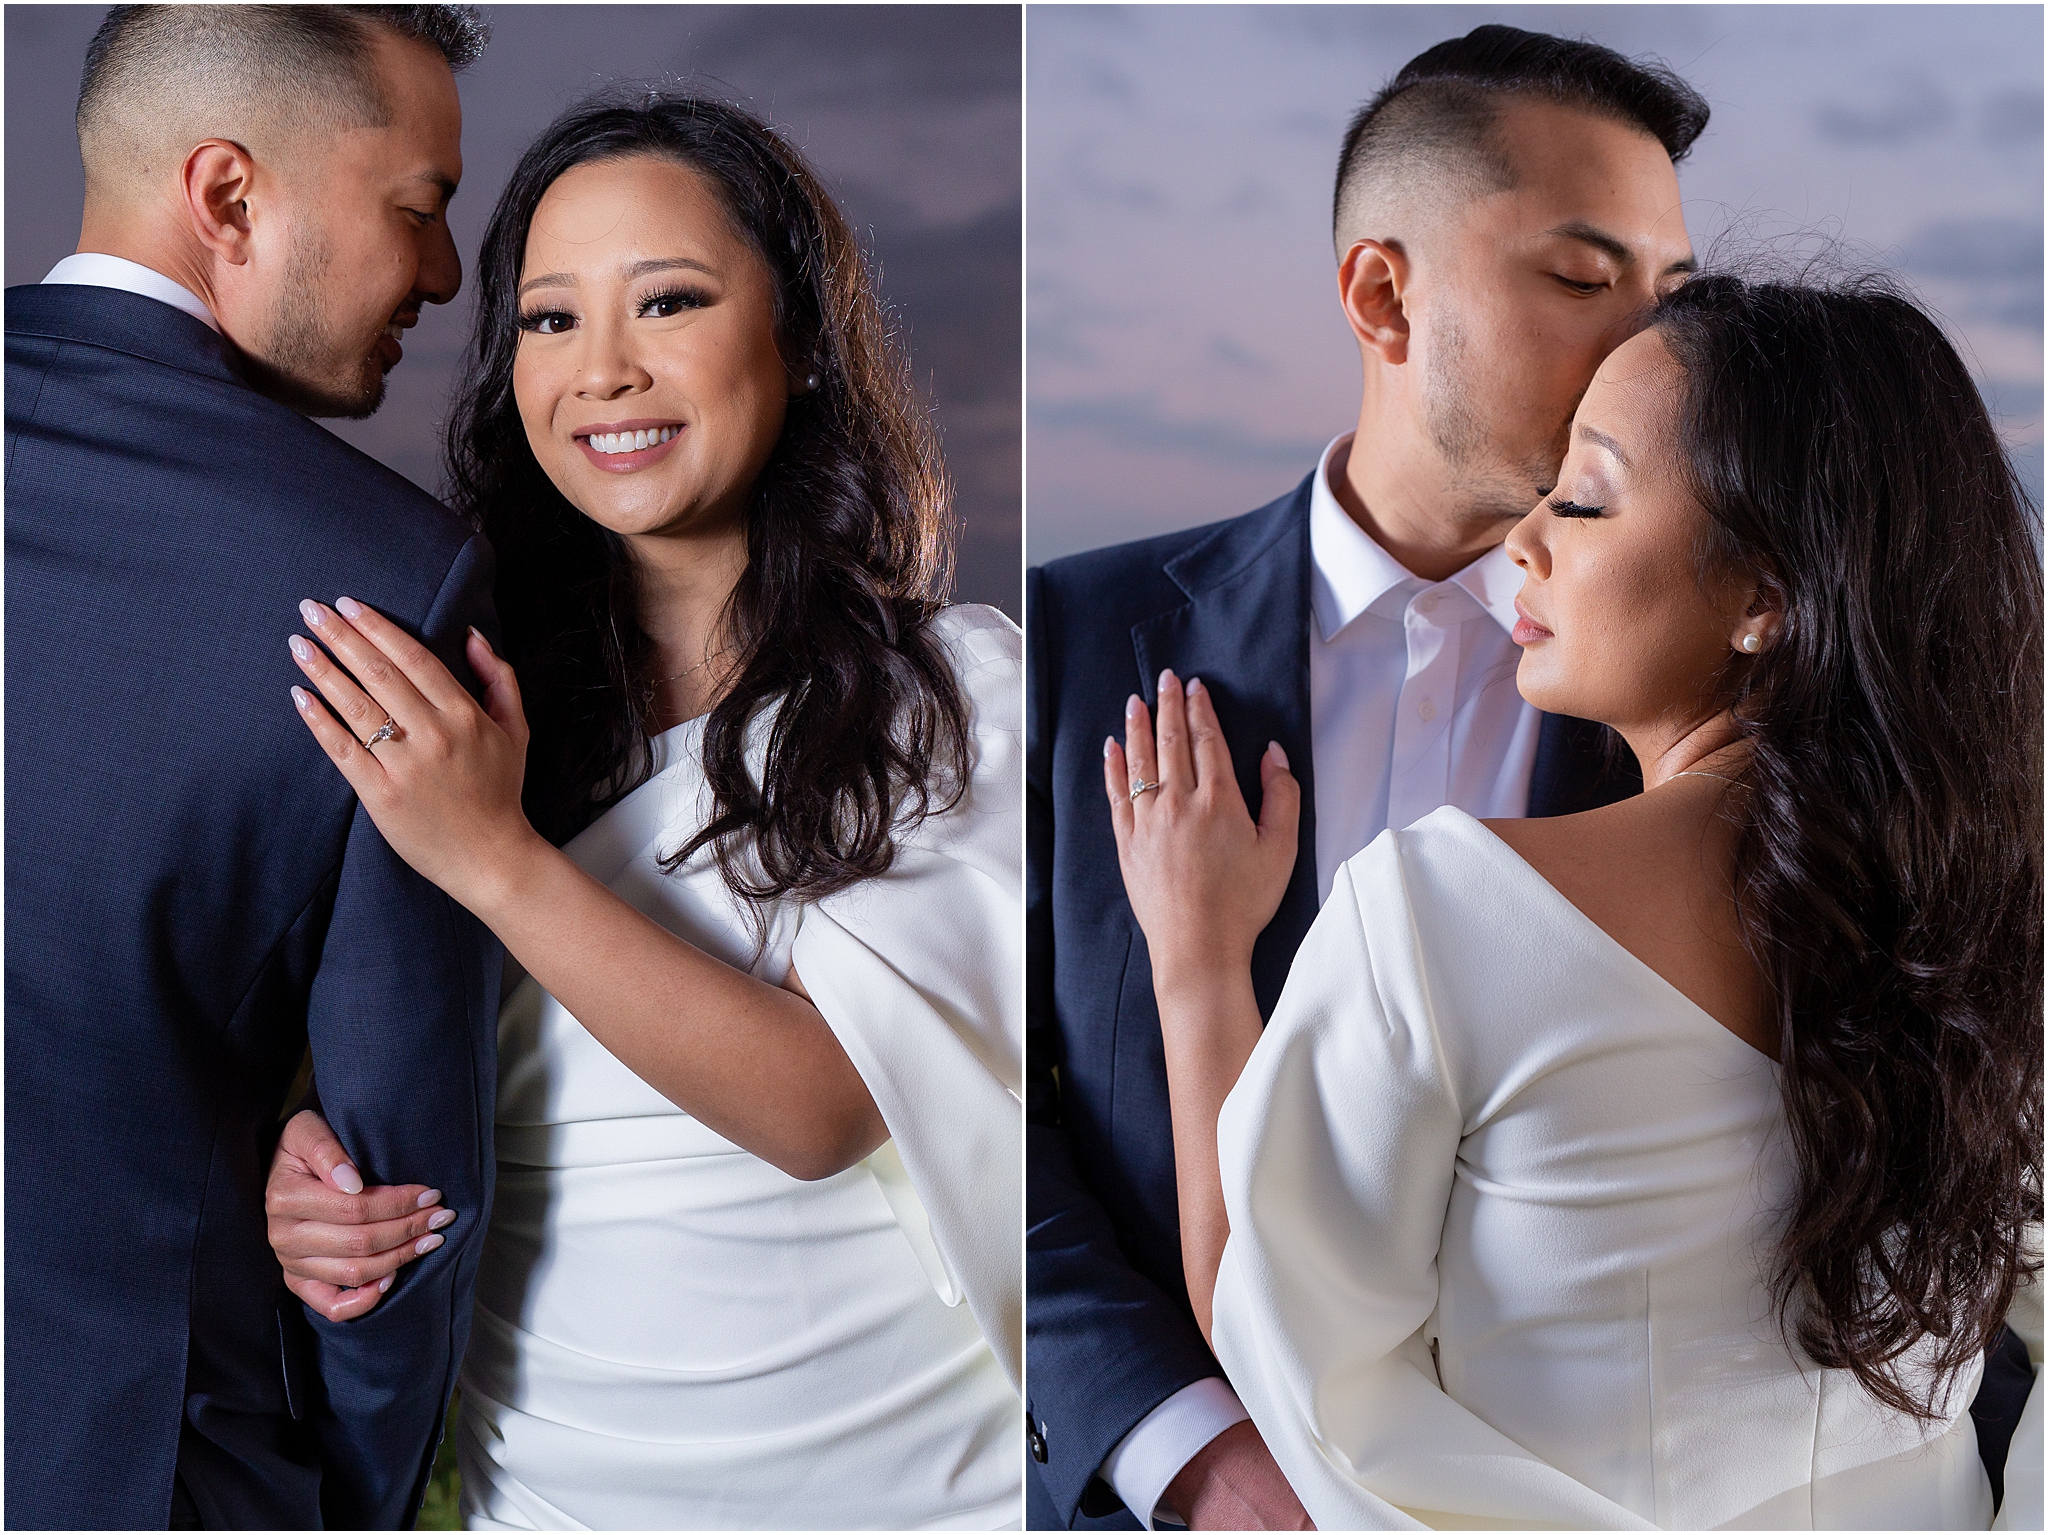 Dallas wedding photographer captures elegant engagement portraits at sunset